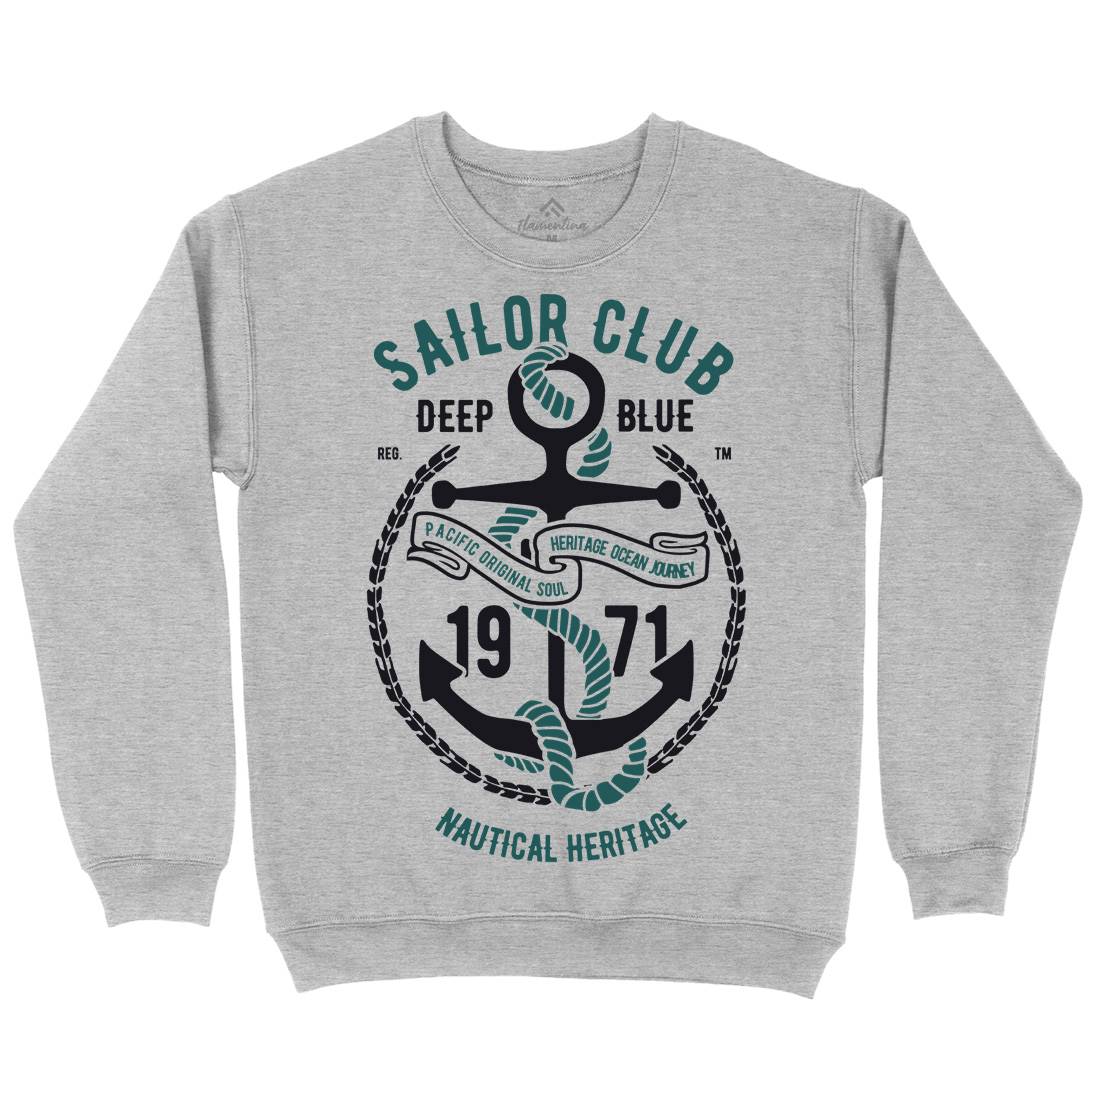 Sailor Club Mens Crew Neck Sweatshirt Navy B445